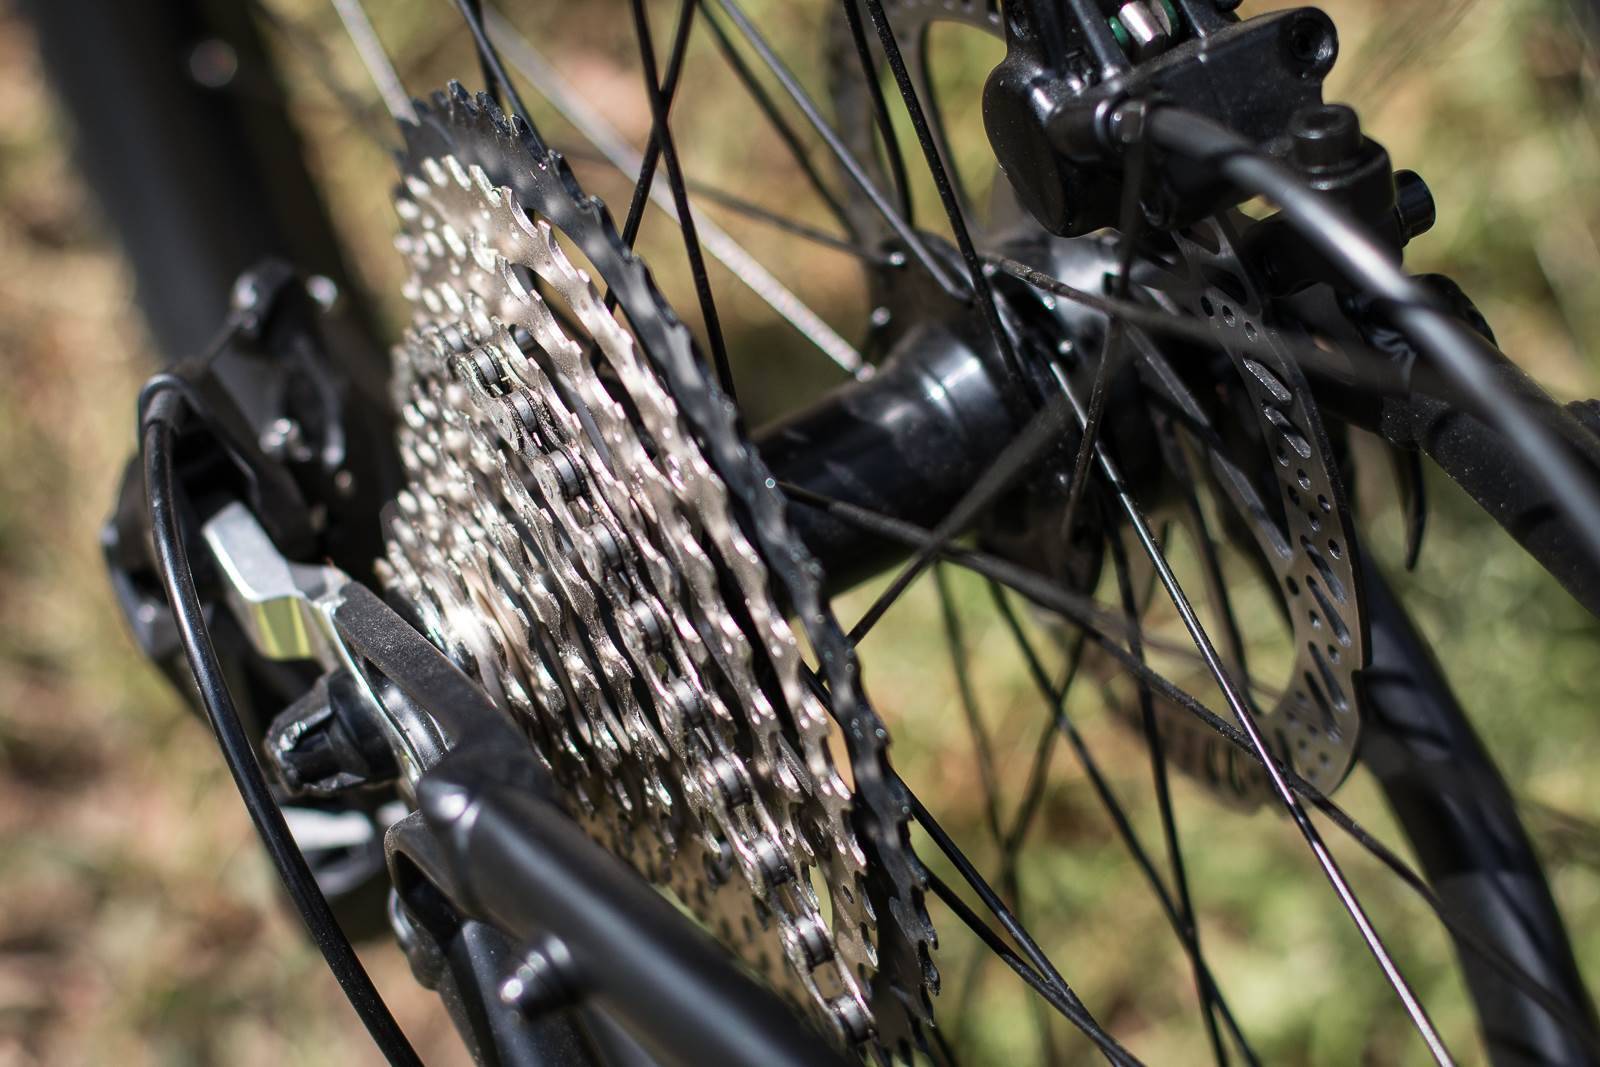 We Test The Aldi Premium 29er Mountain Bike Australian Mountain Bike